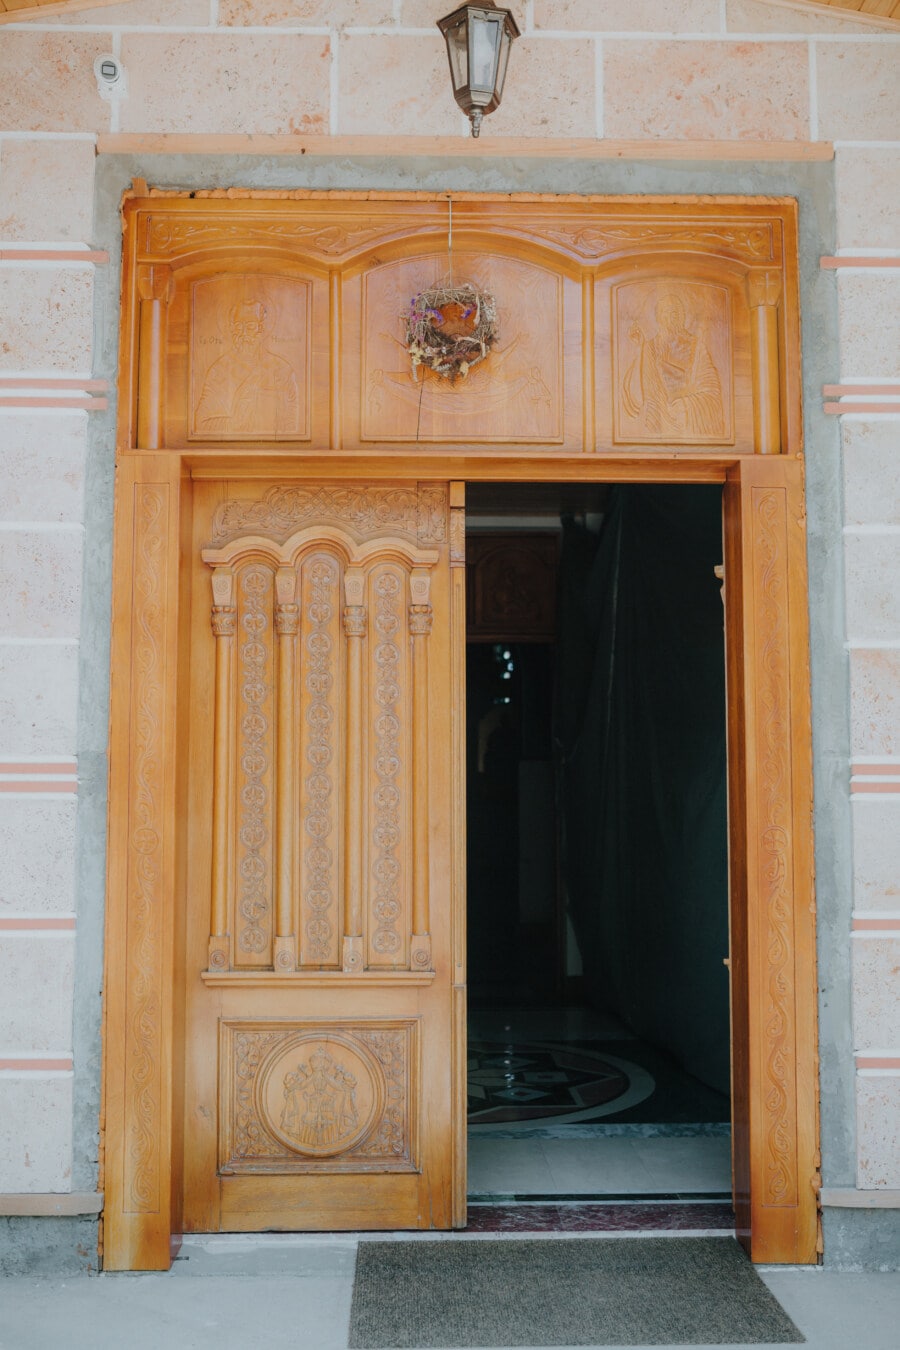 entrada, puerta de enlace, Portal, puerta de entrada, monasterio, carpintería, puerta de entrada, puerta, arquitectura, madera